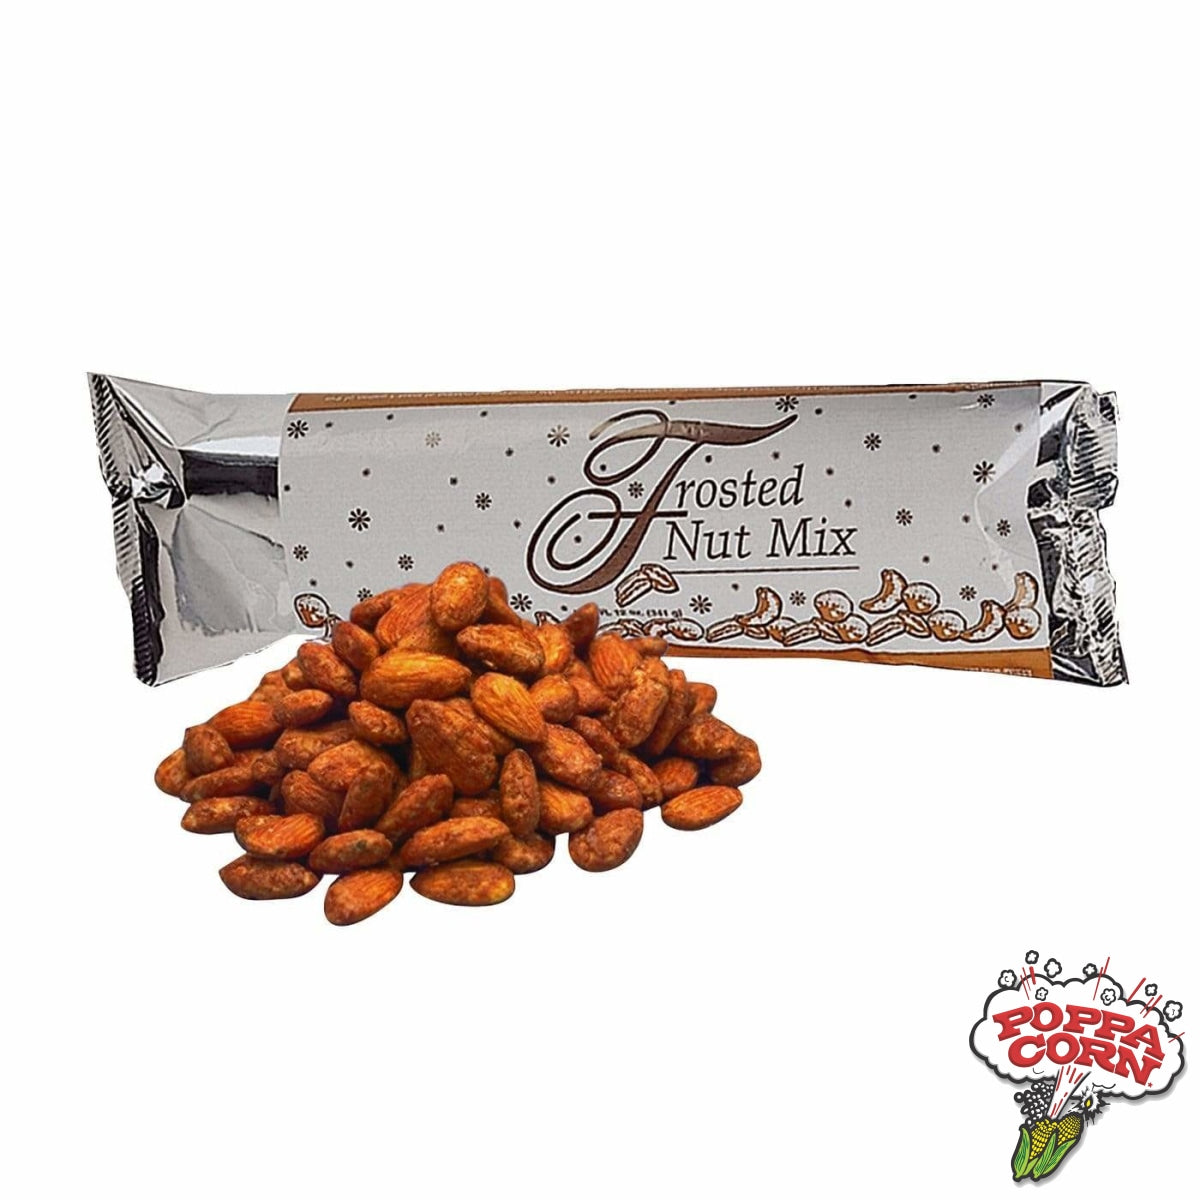 GM4503 - Frosted Nut Mix - 36 x 12oz/Case - Poppa Corn Corp